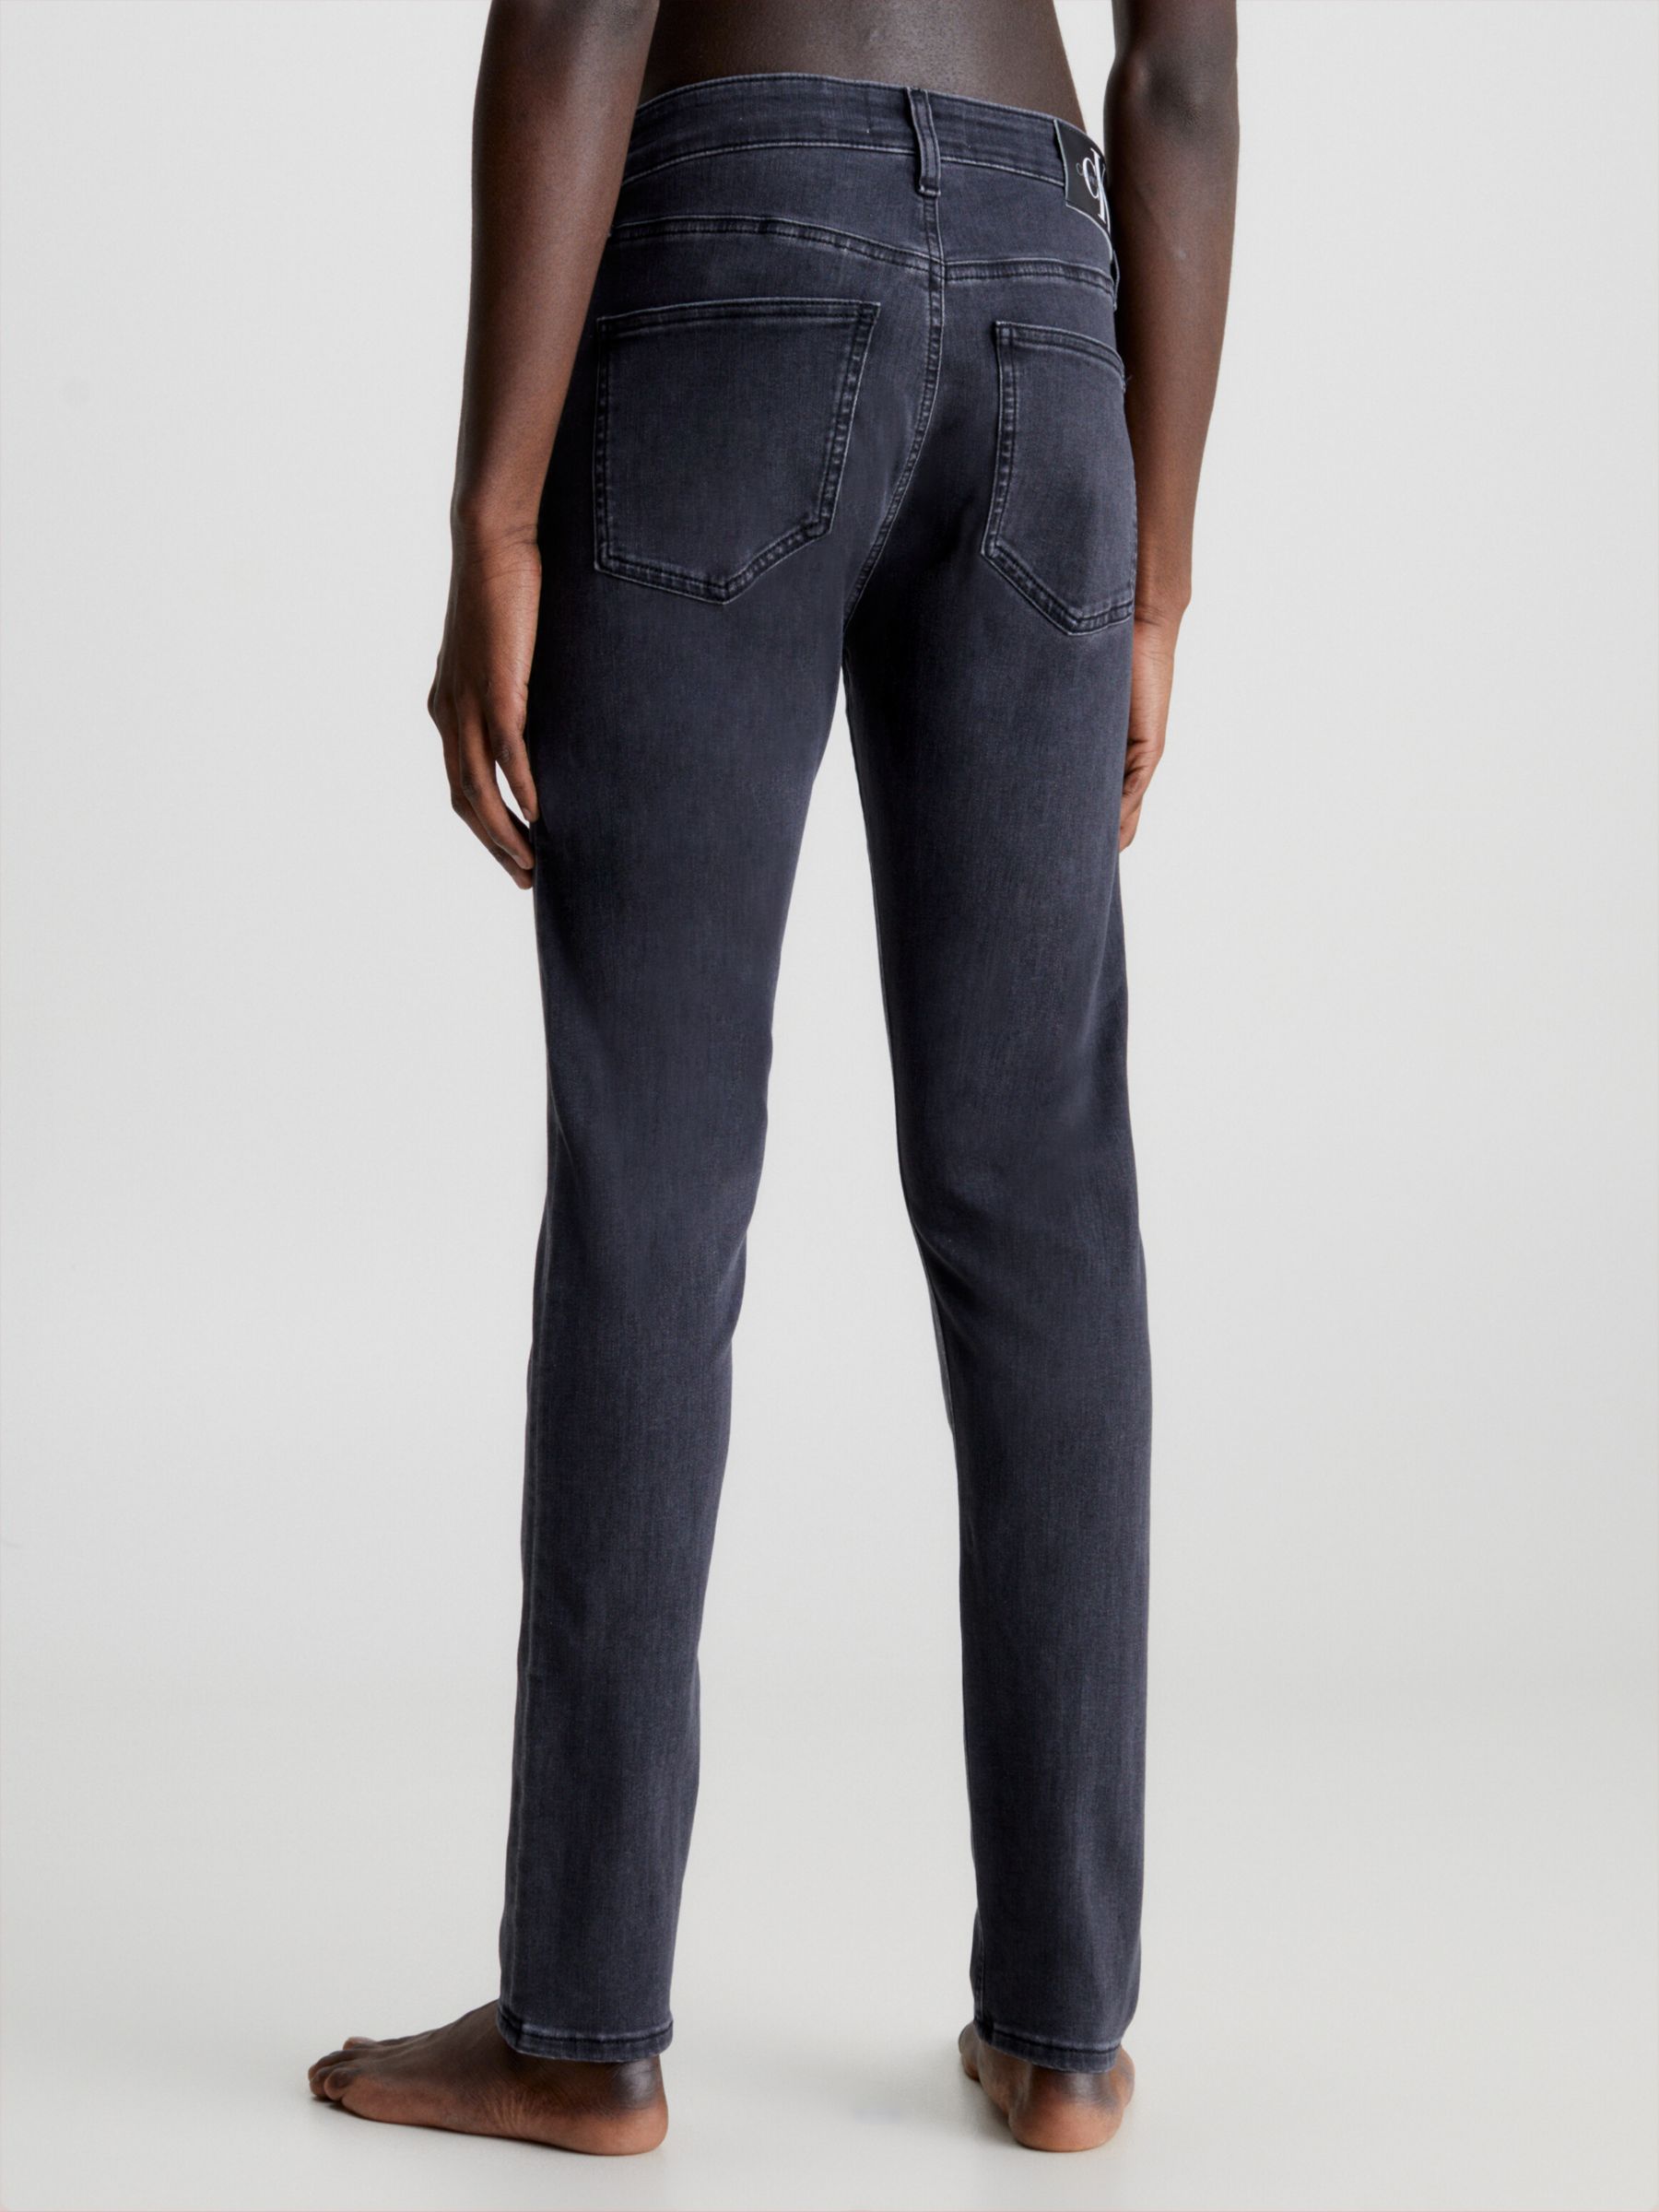 Calvin Klein Skinny Jeans, Denim Grey at John Lewis & Partners